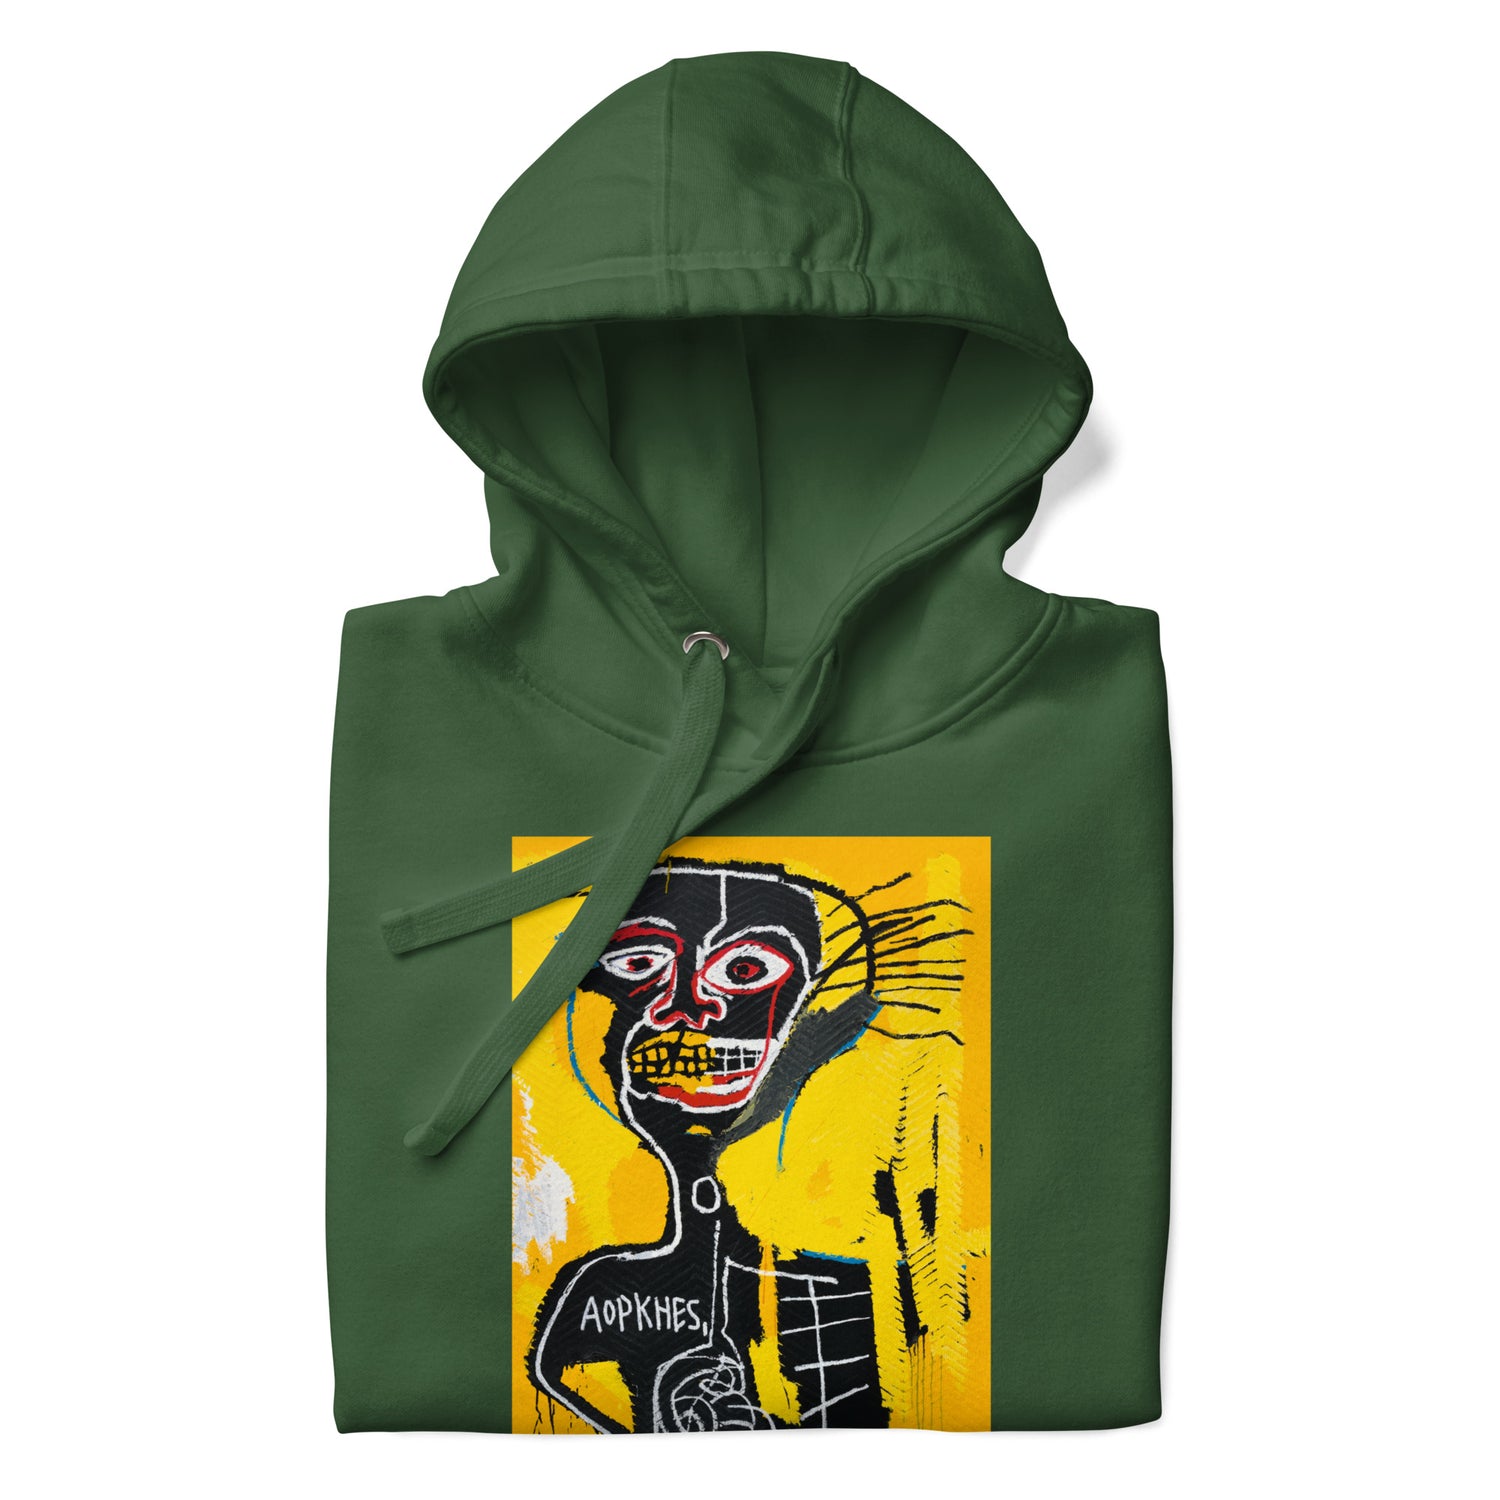 Jean-Michel Basquiat "Cabeza" Artwork Printed Premium Streetwear Sweatshirt Hoodie Forest Green